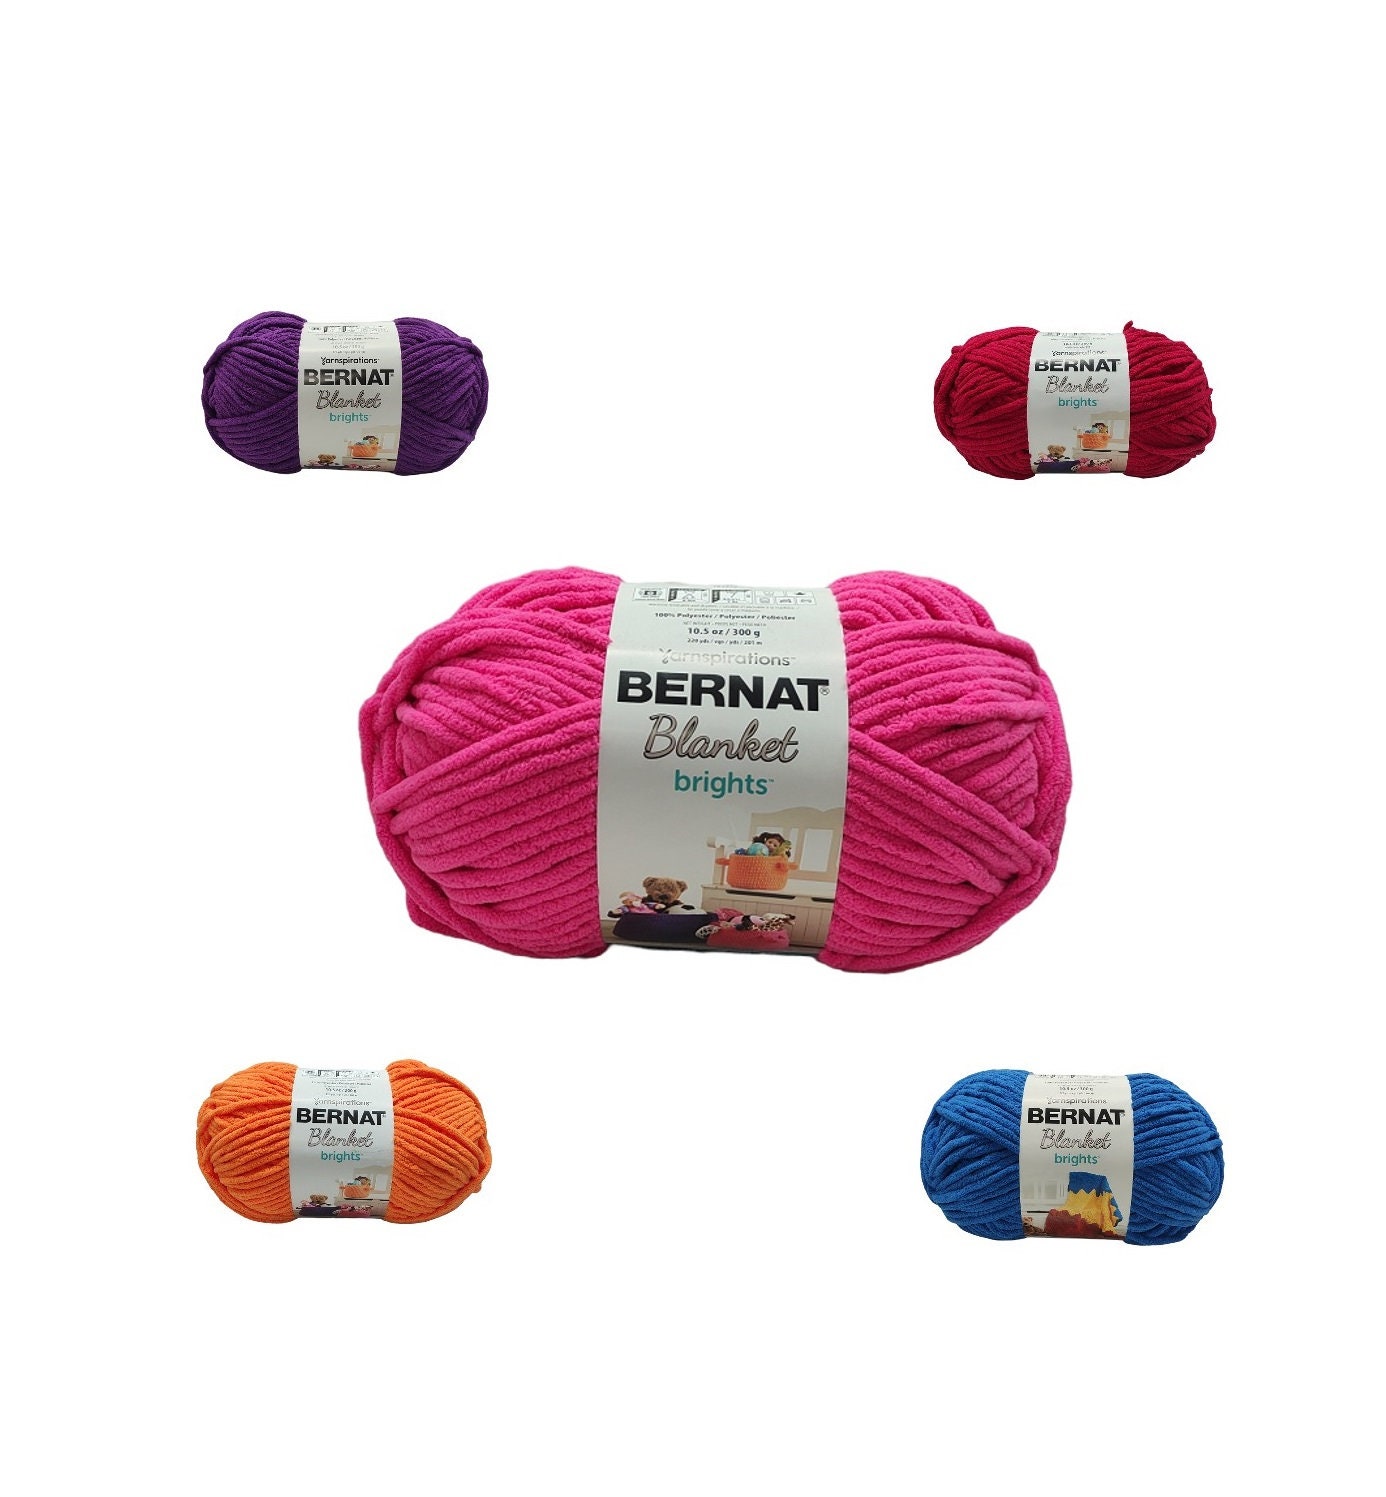 Bernat Baby Velvet Yarn/soft Yarn/baby Yarn/baby Blanket Supplies